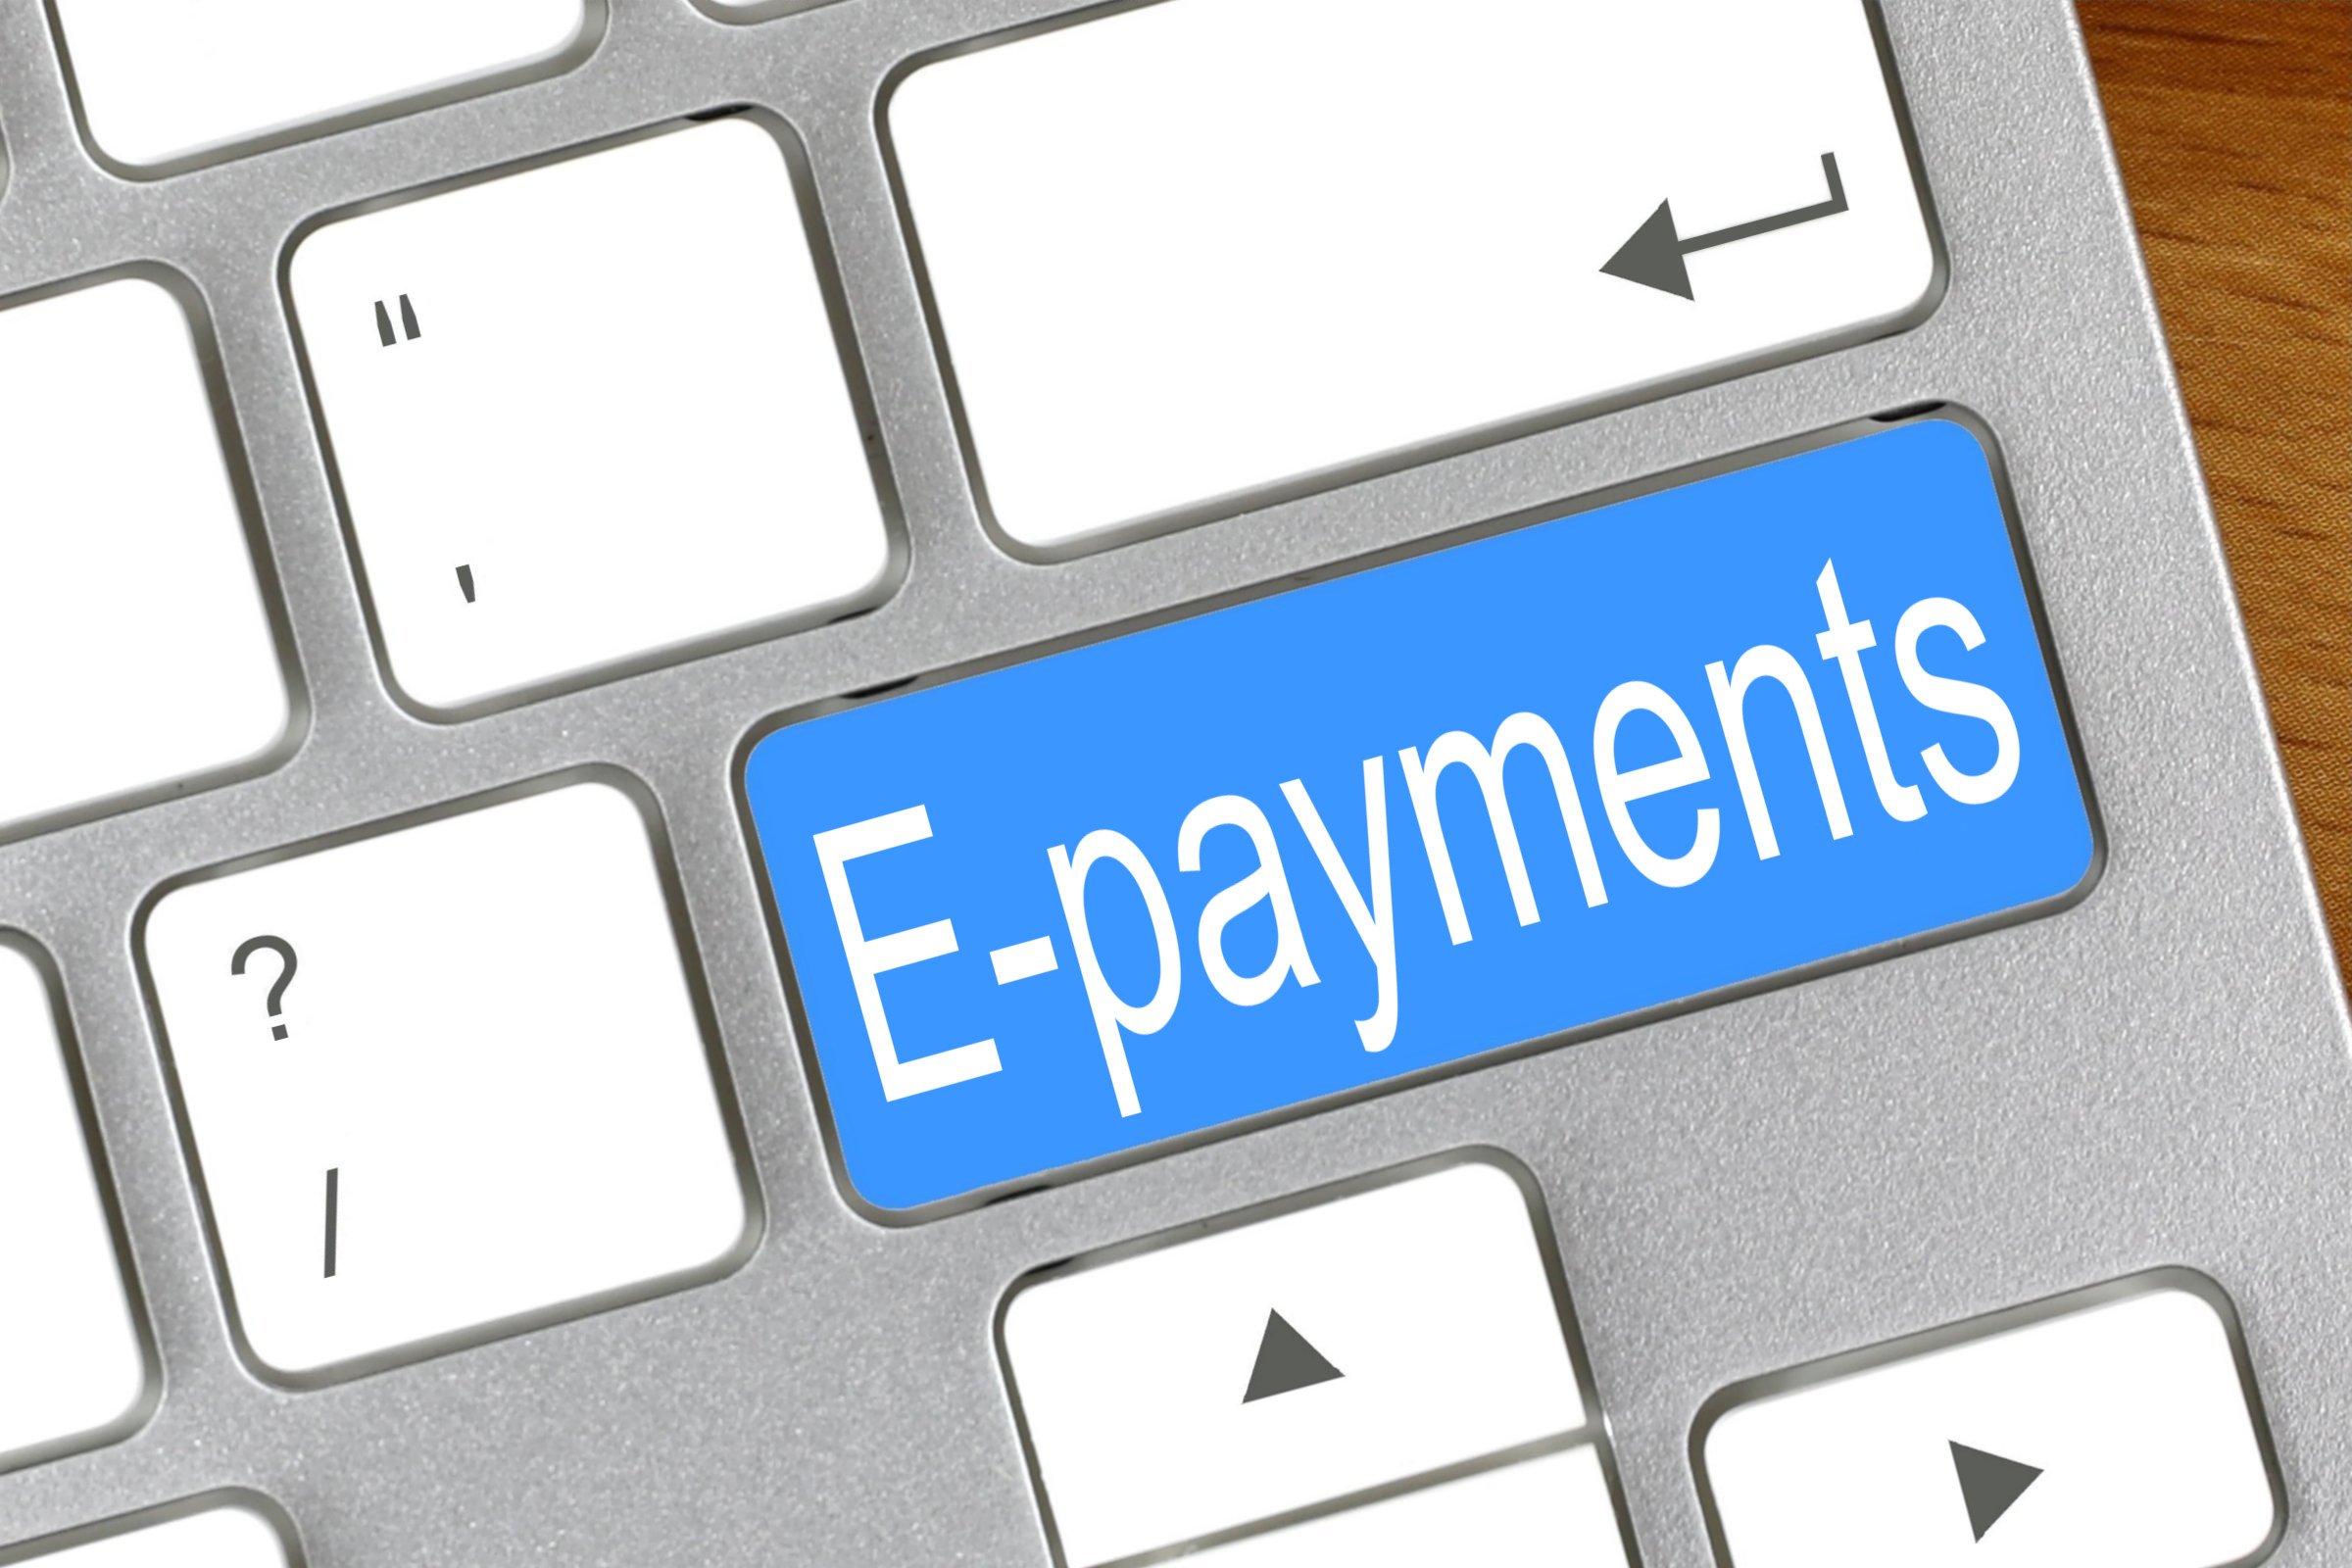 e payments